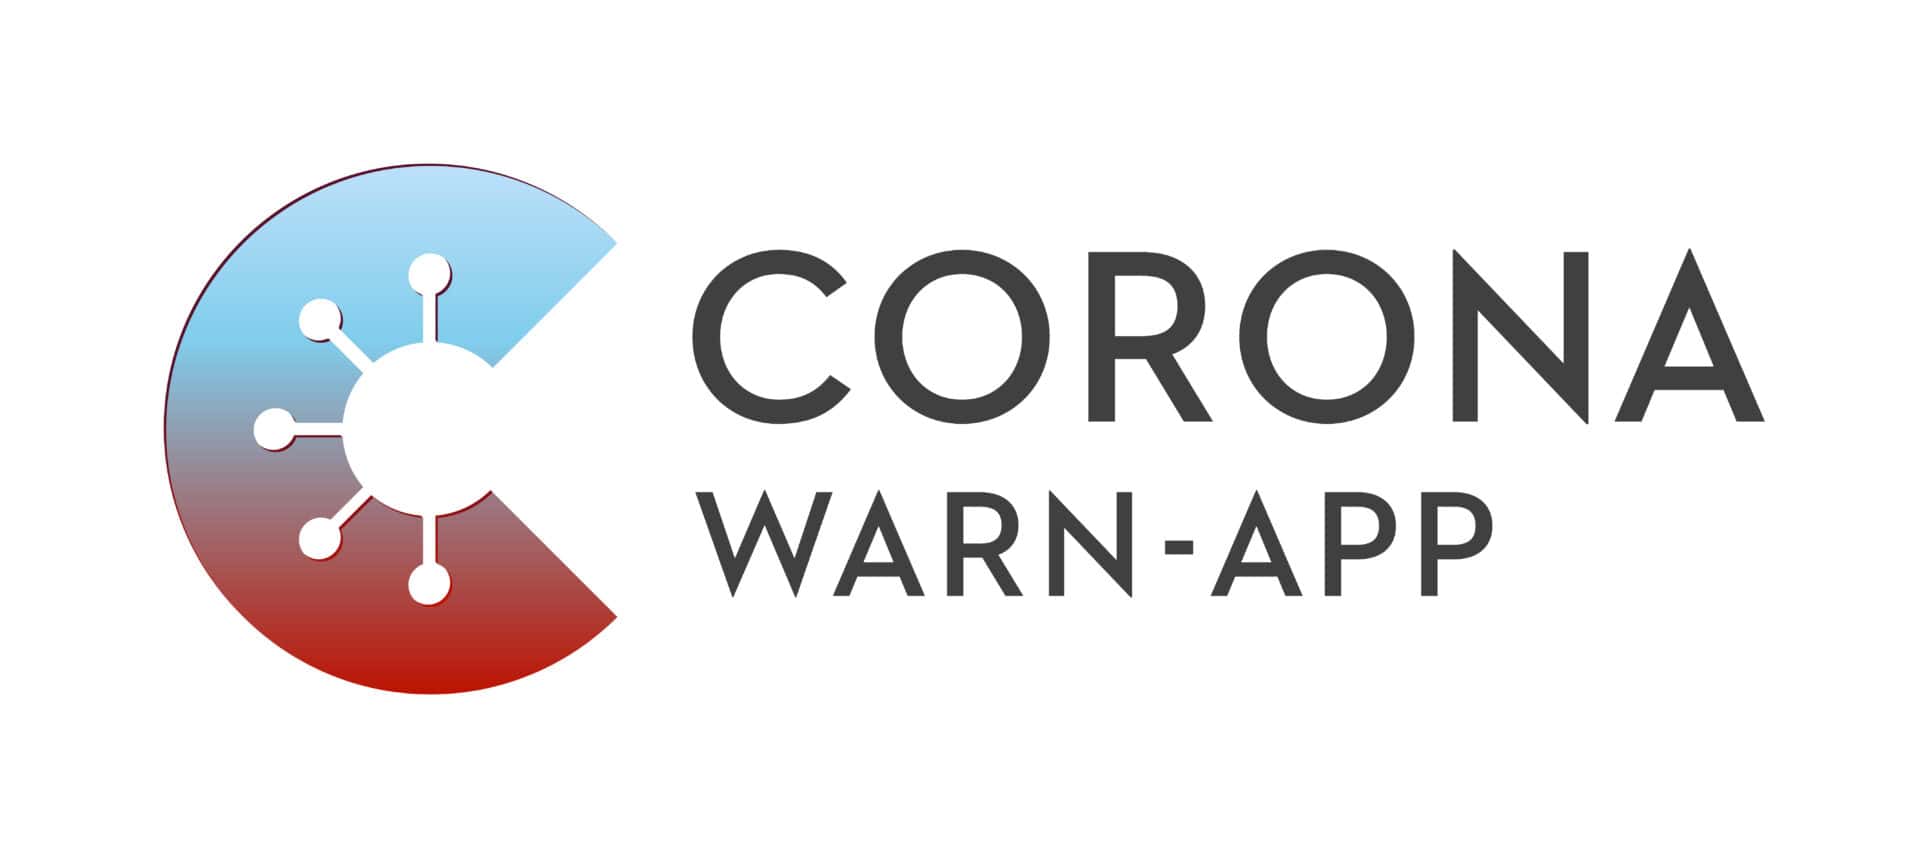 Corona-Warn-App statt Luca-App verwenden!